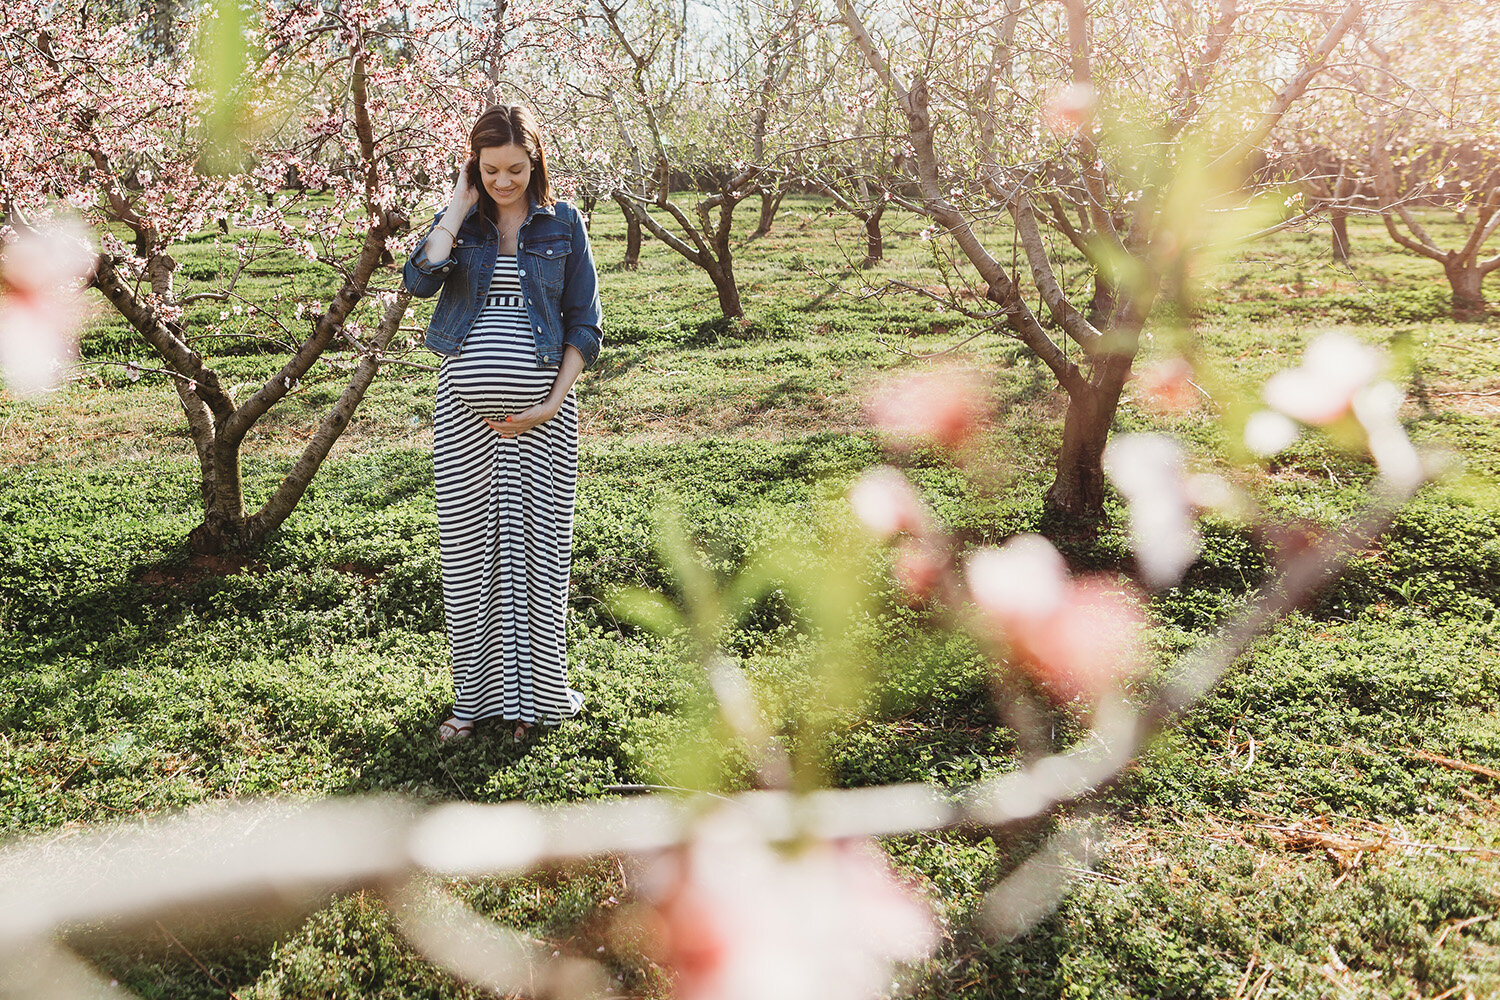 pregnancy photos in peach blossom field